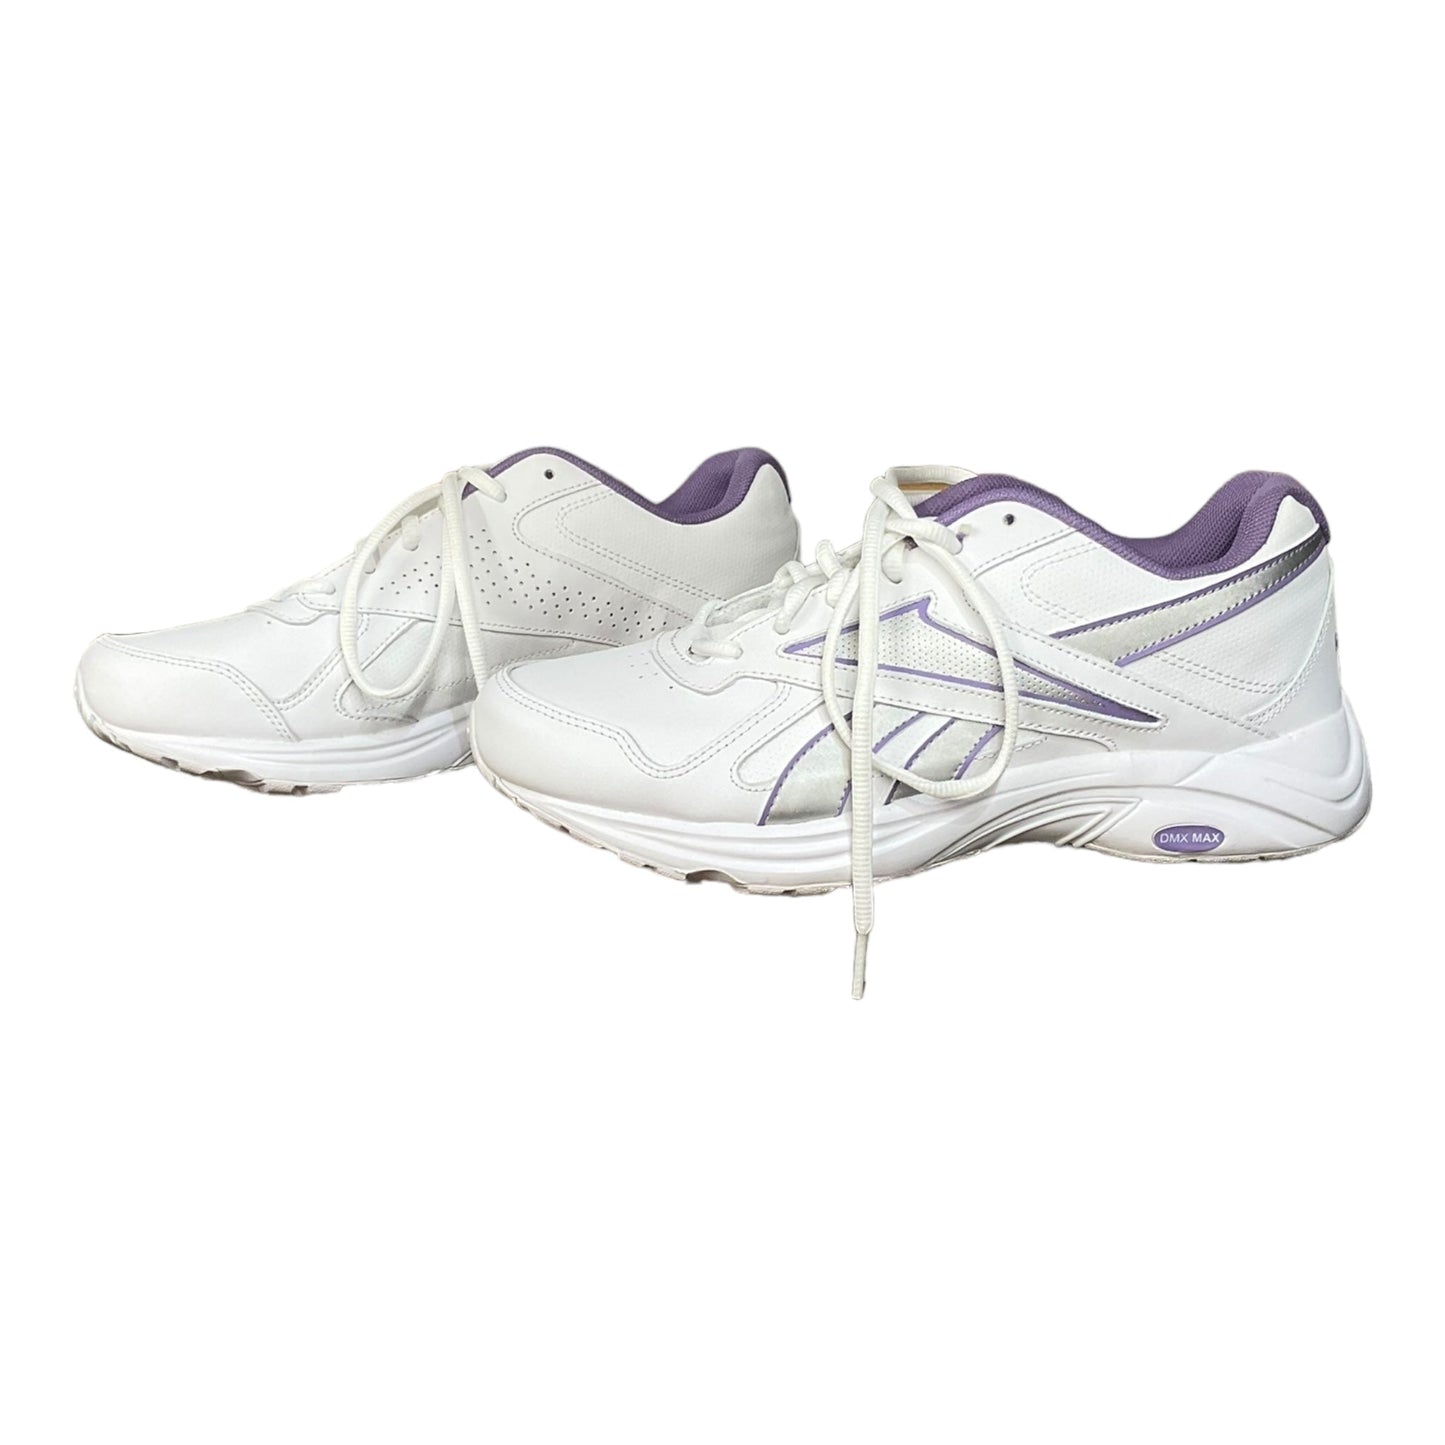 Purple & White Shoes Athletic Reebok, Size 9